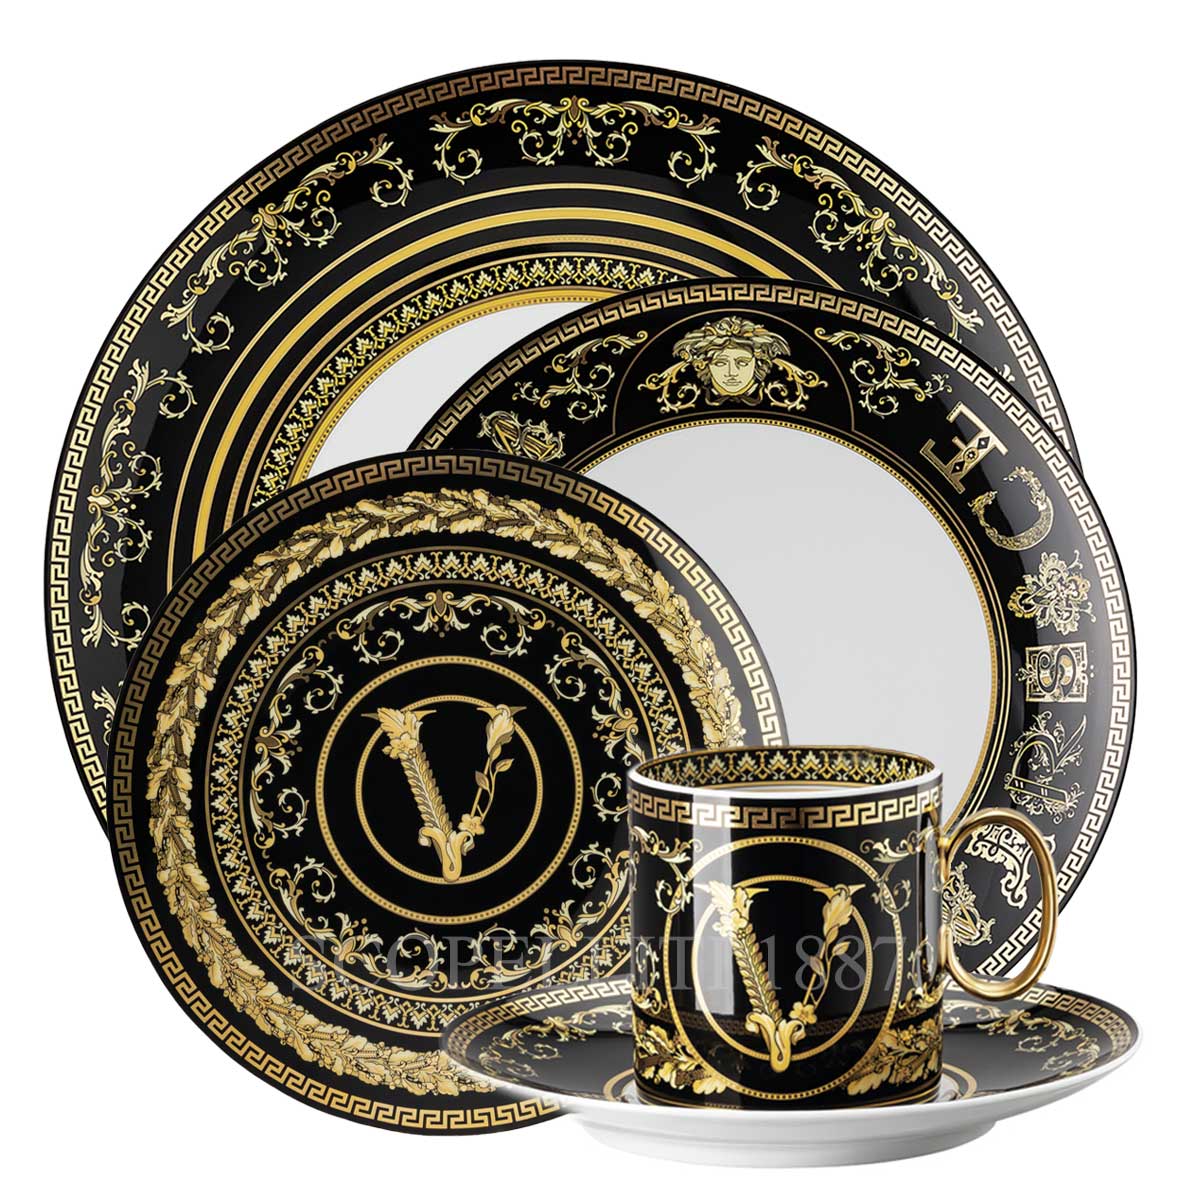 Versace Dinnerware Collection